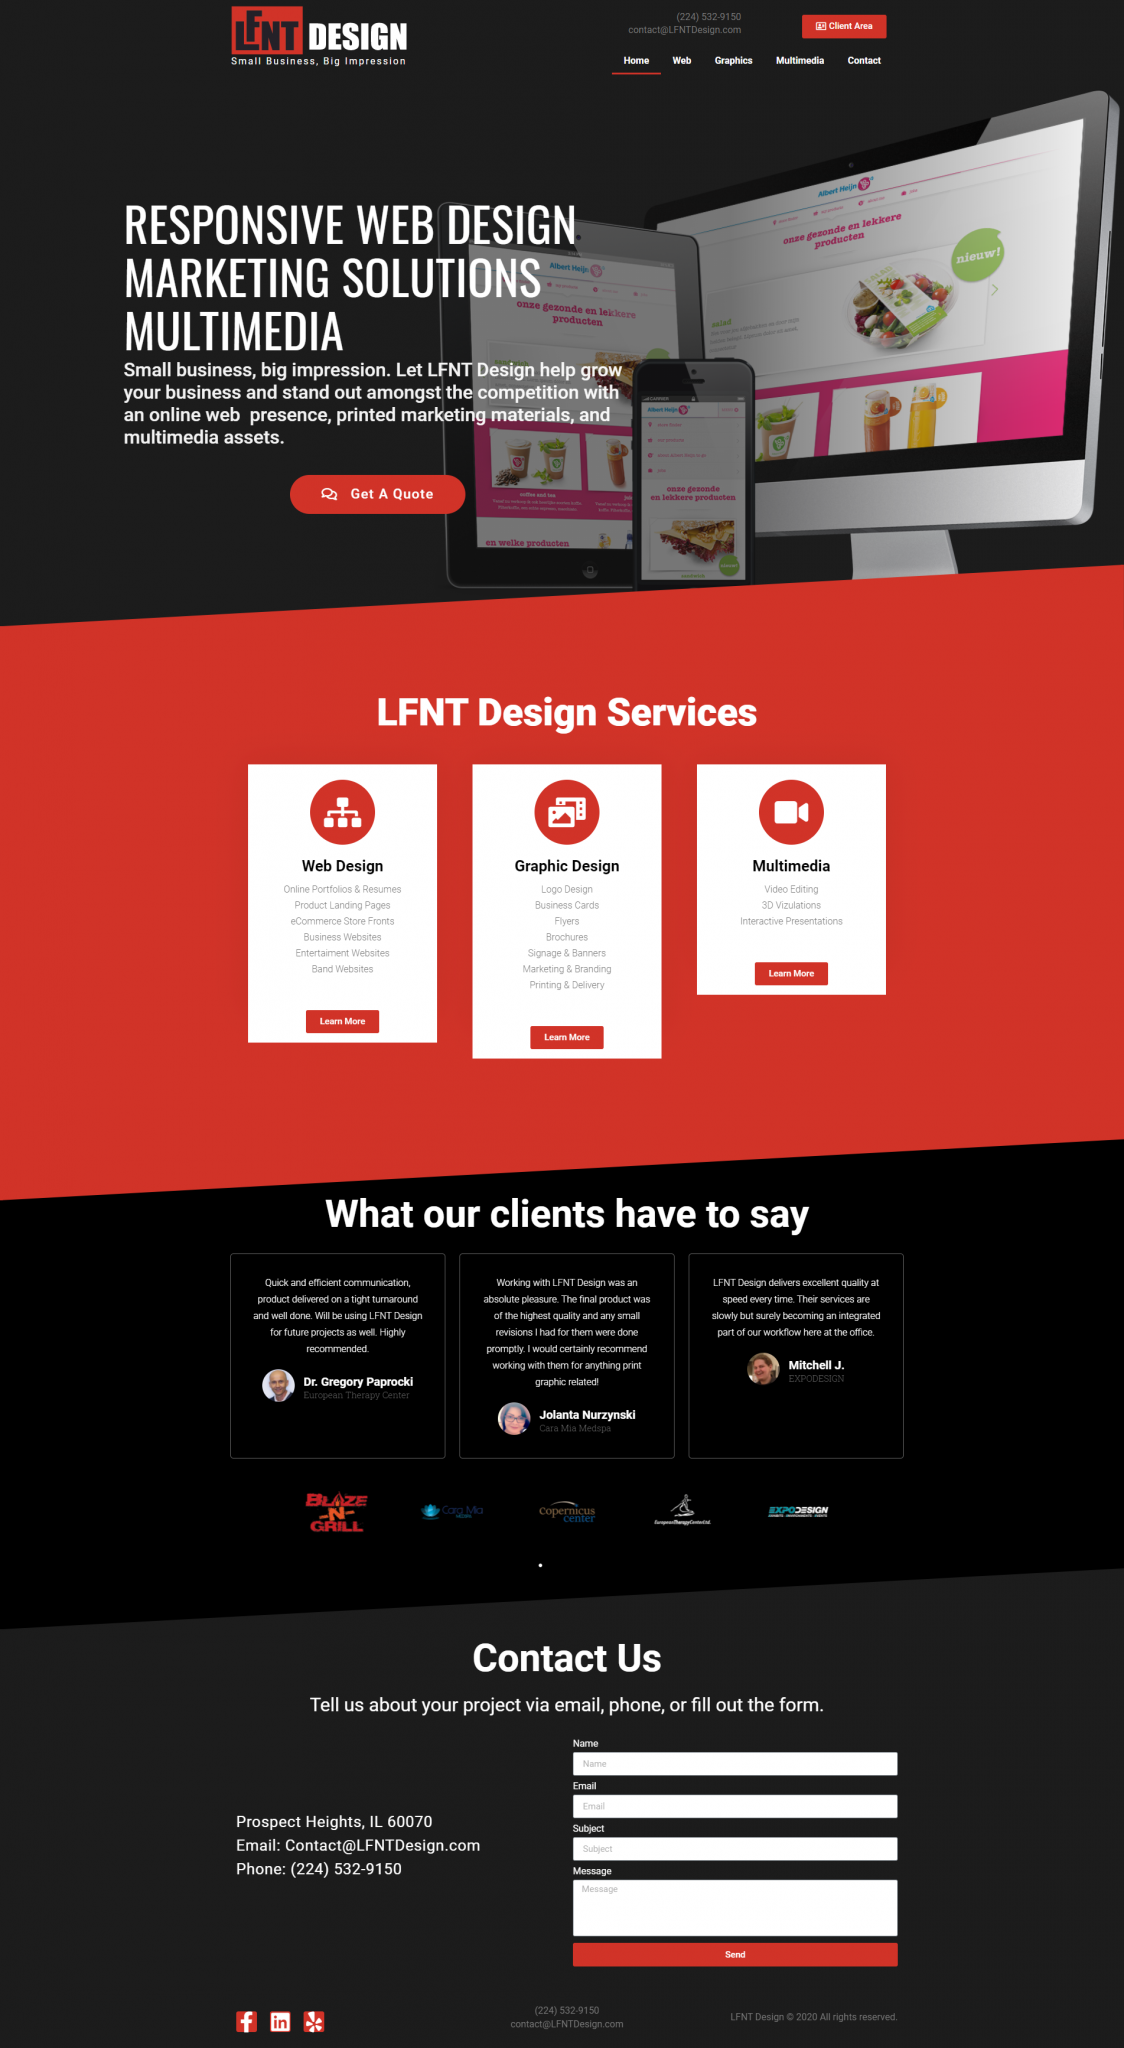 LFNT Design